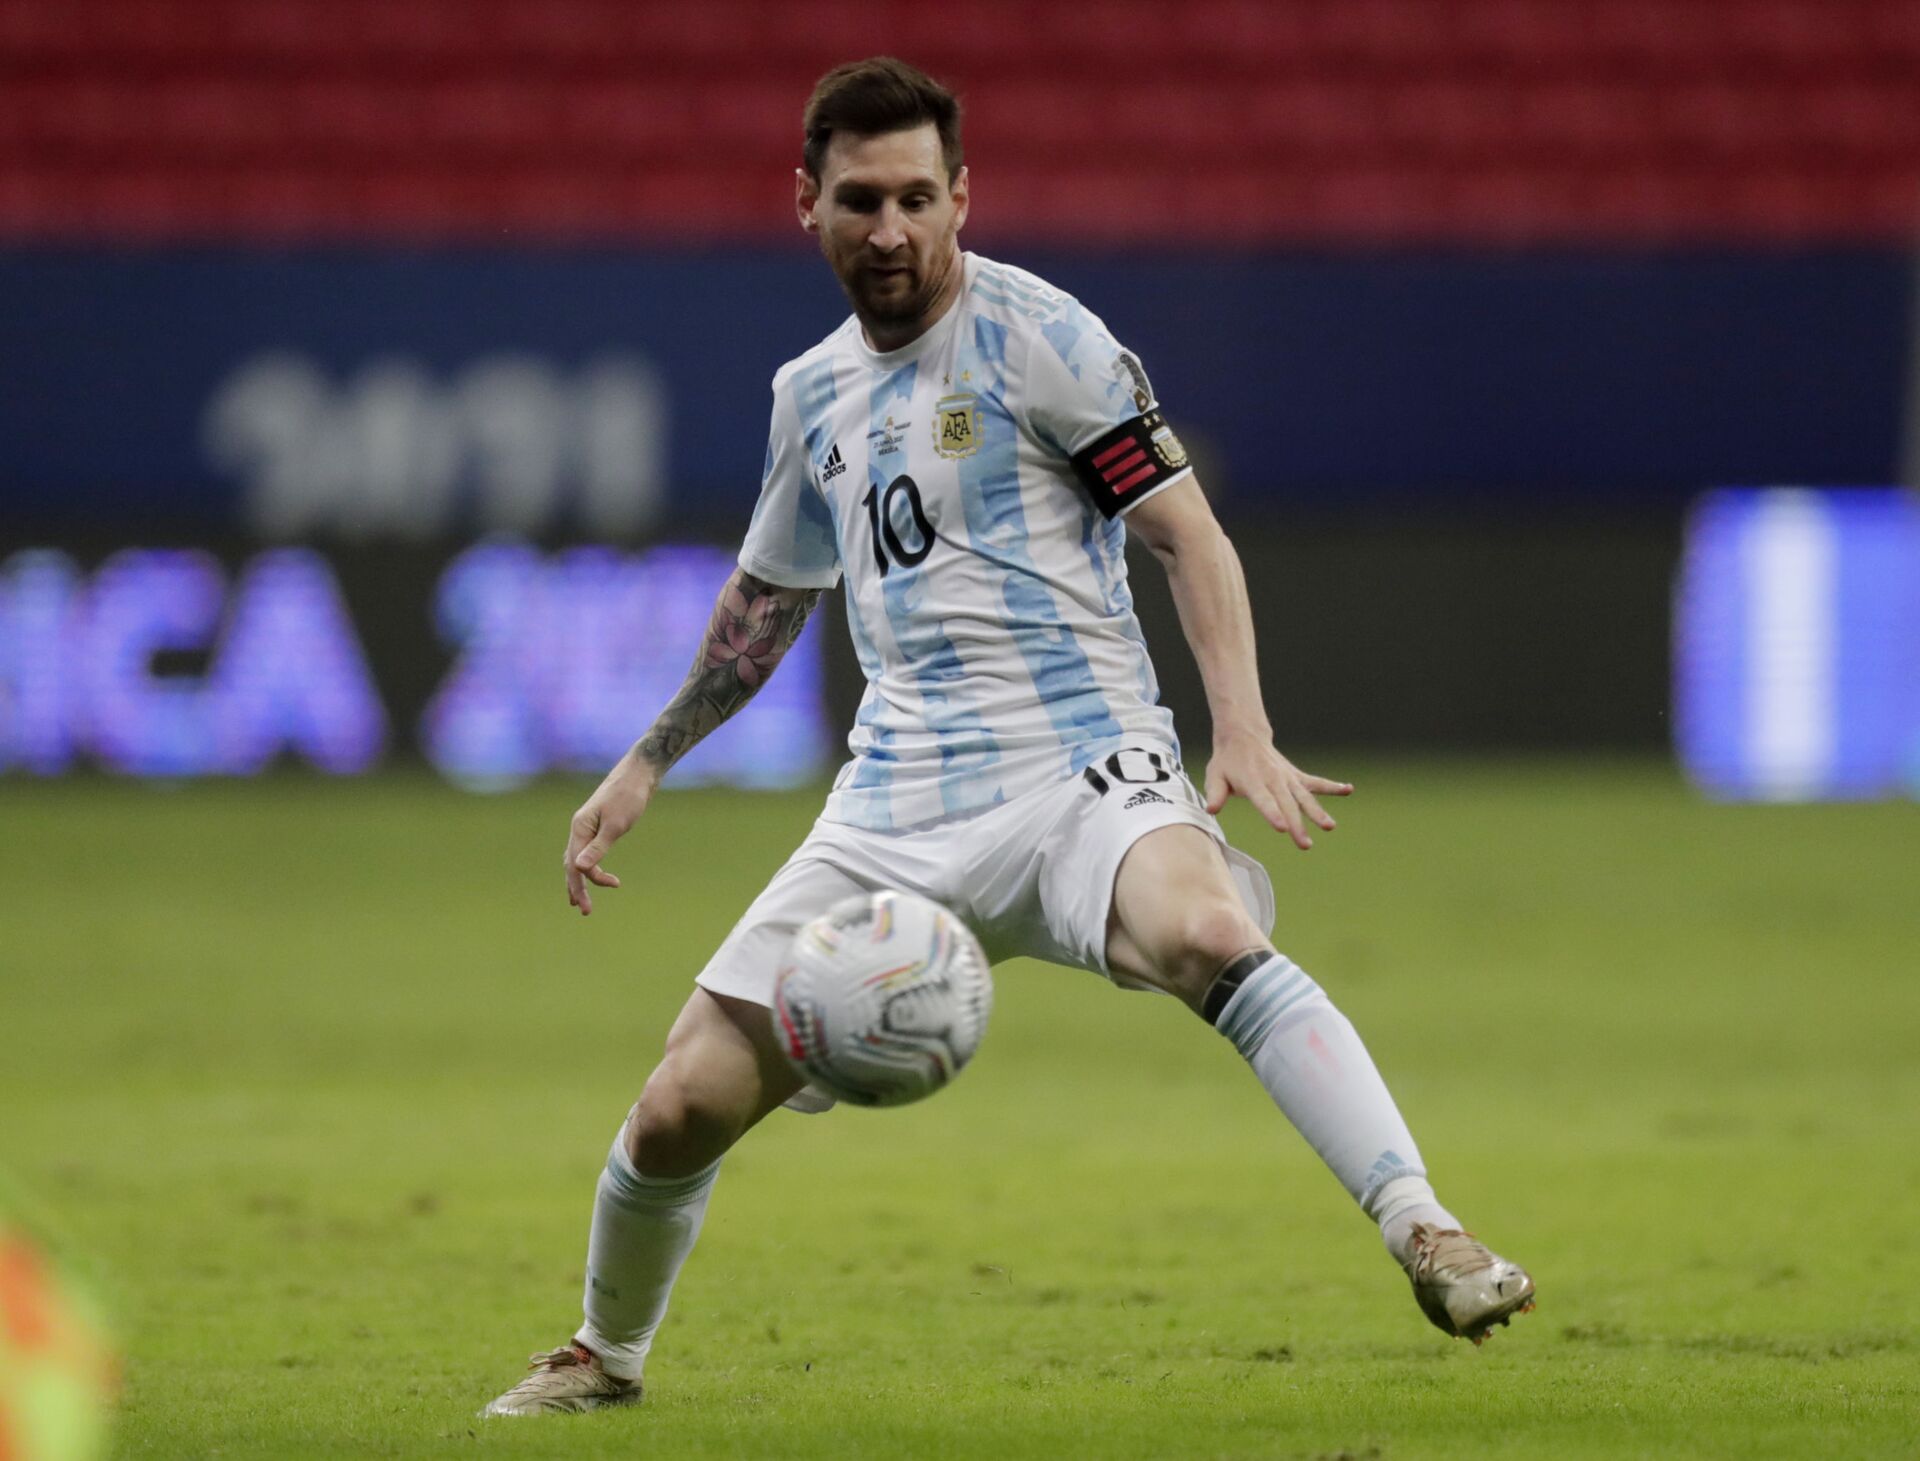 Soccer Football - Copa America 2021 - Group A - Argentina v Paraguay - Estadio Mane Garrincha, Brasilia, Brazil - June 21, 2021 Argentina's Lionel Messi in action - Sputnik International, 1920, 07.09.2021